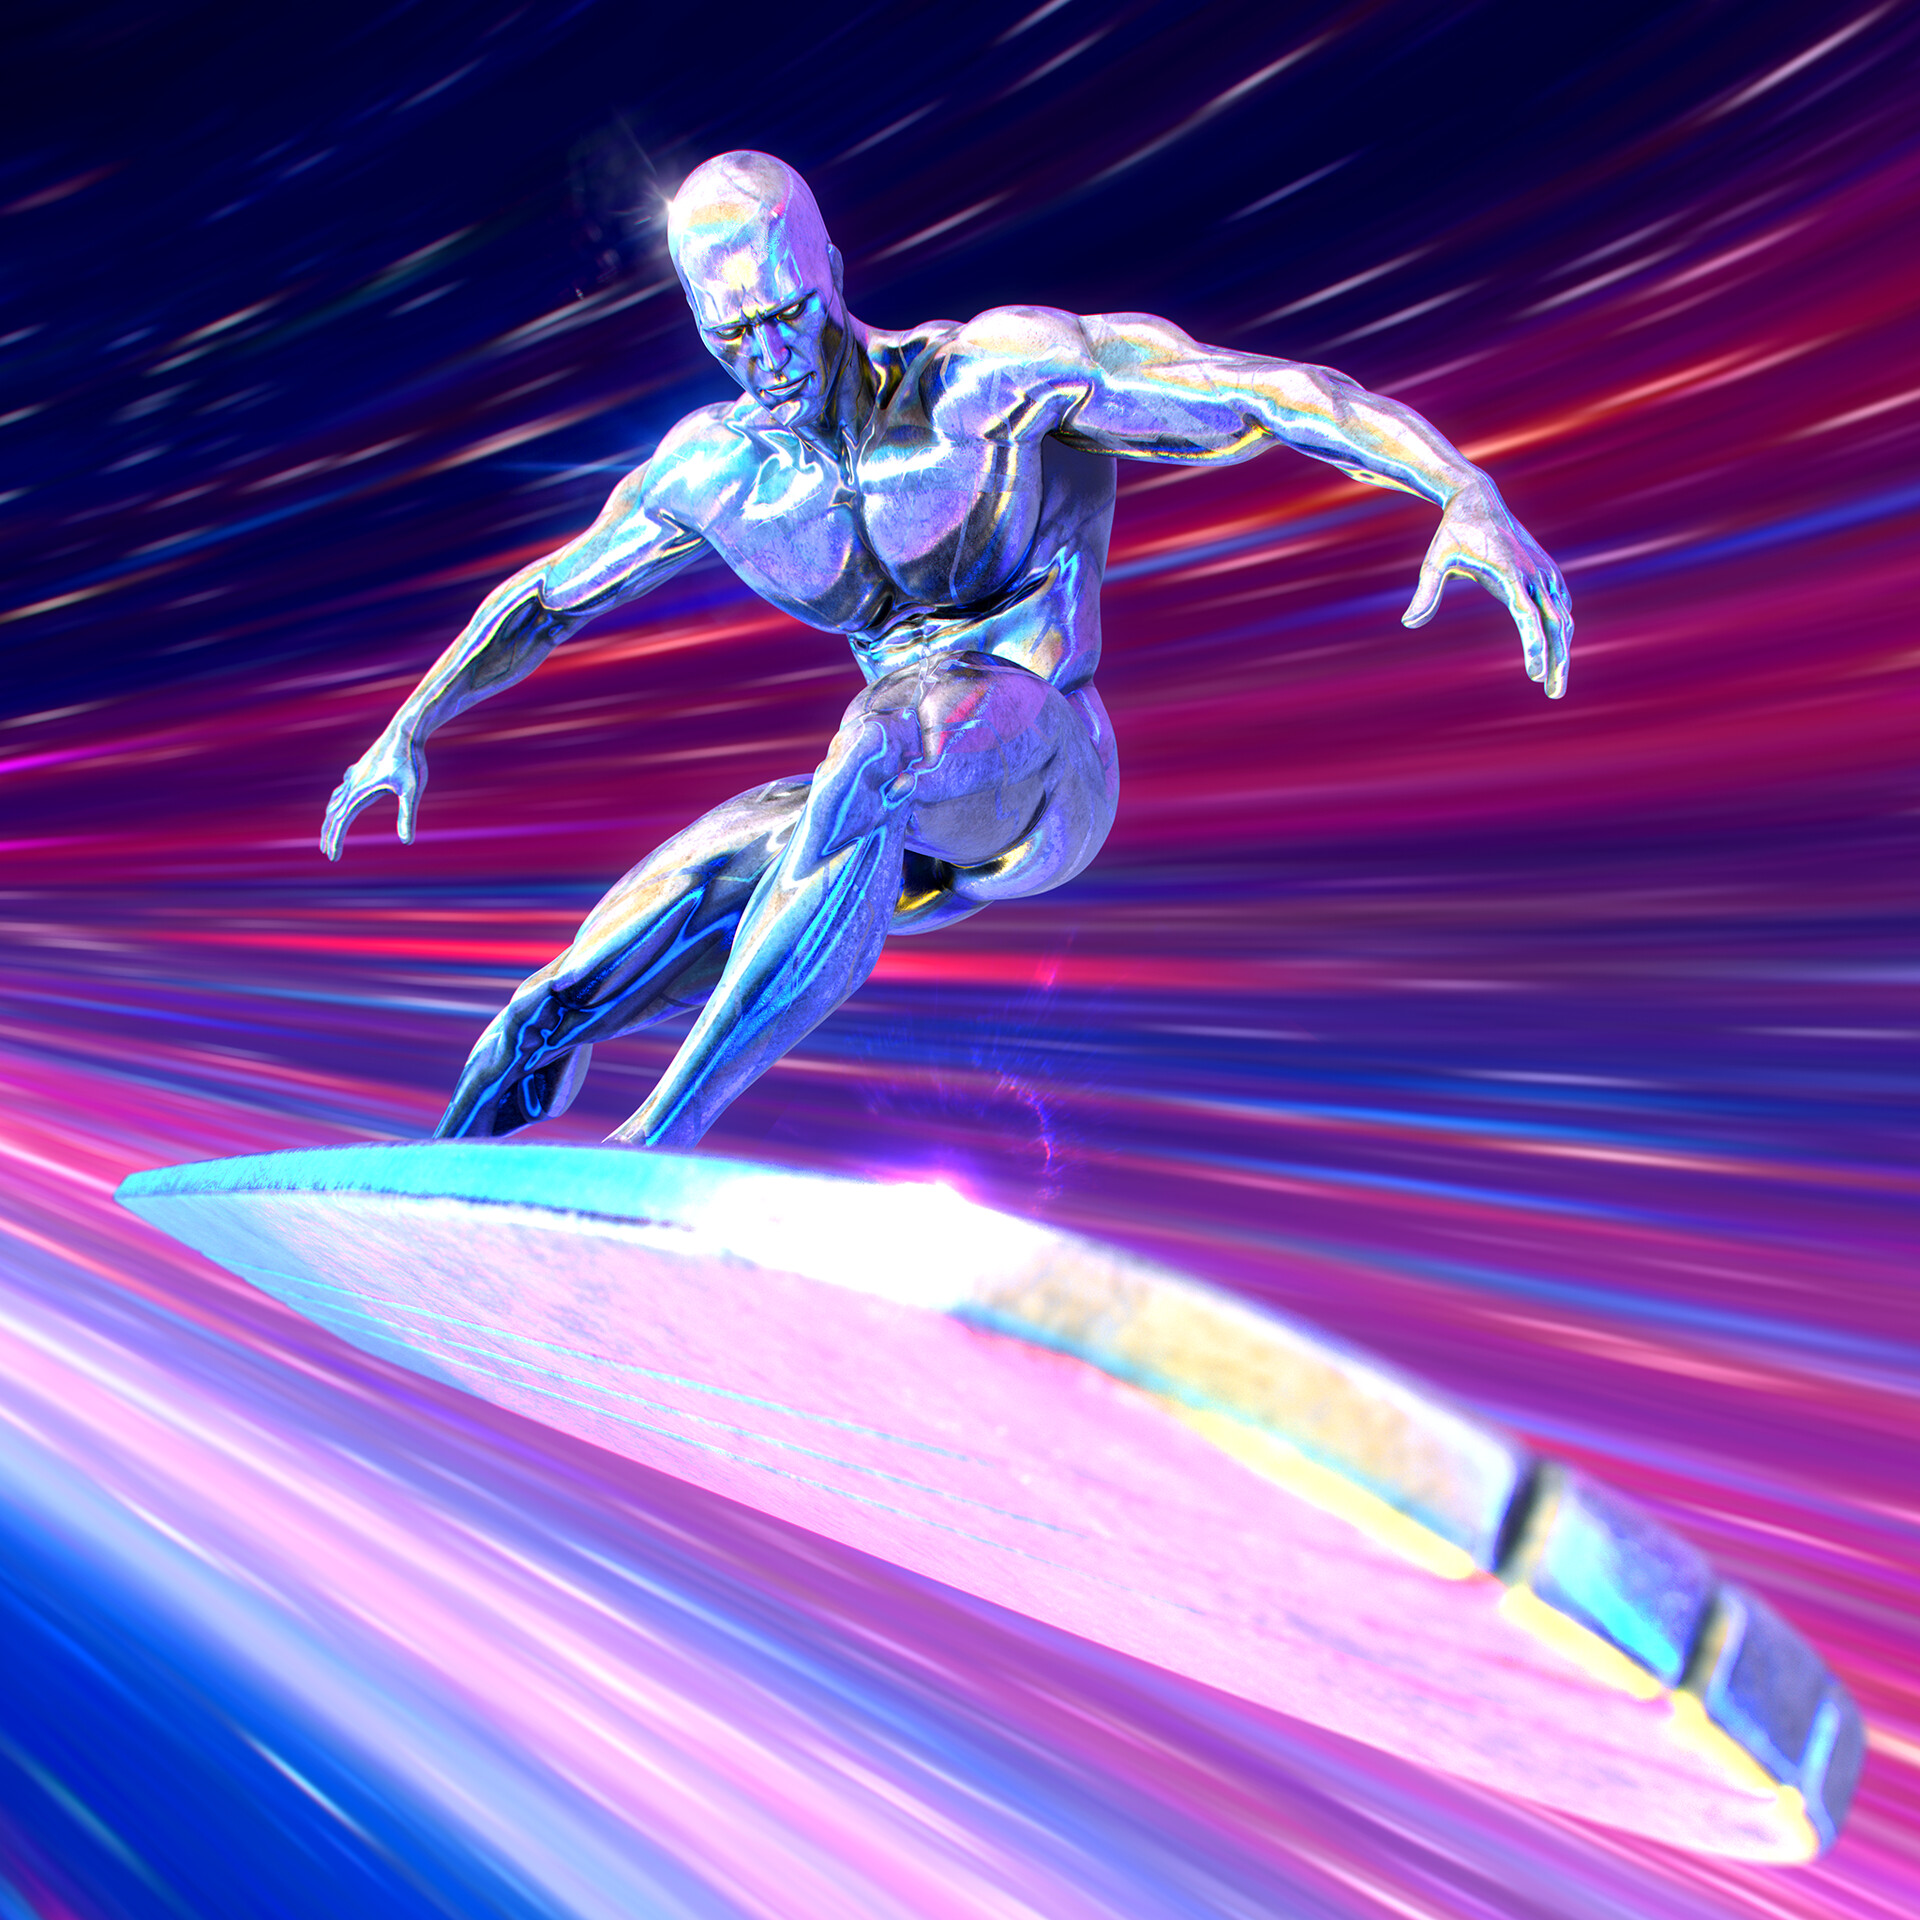 ArtStation - Superheroes - Silver surfer